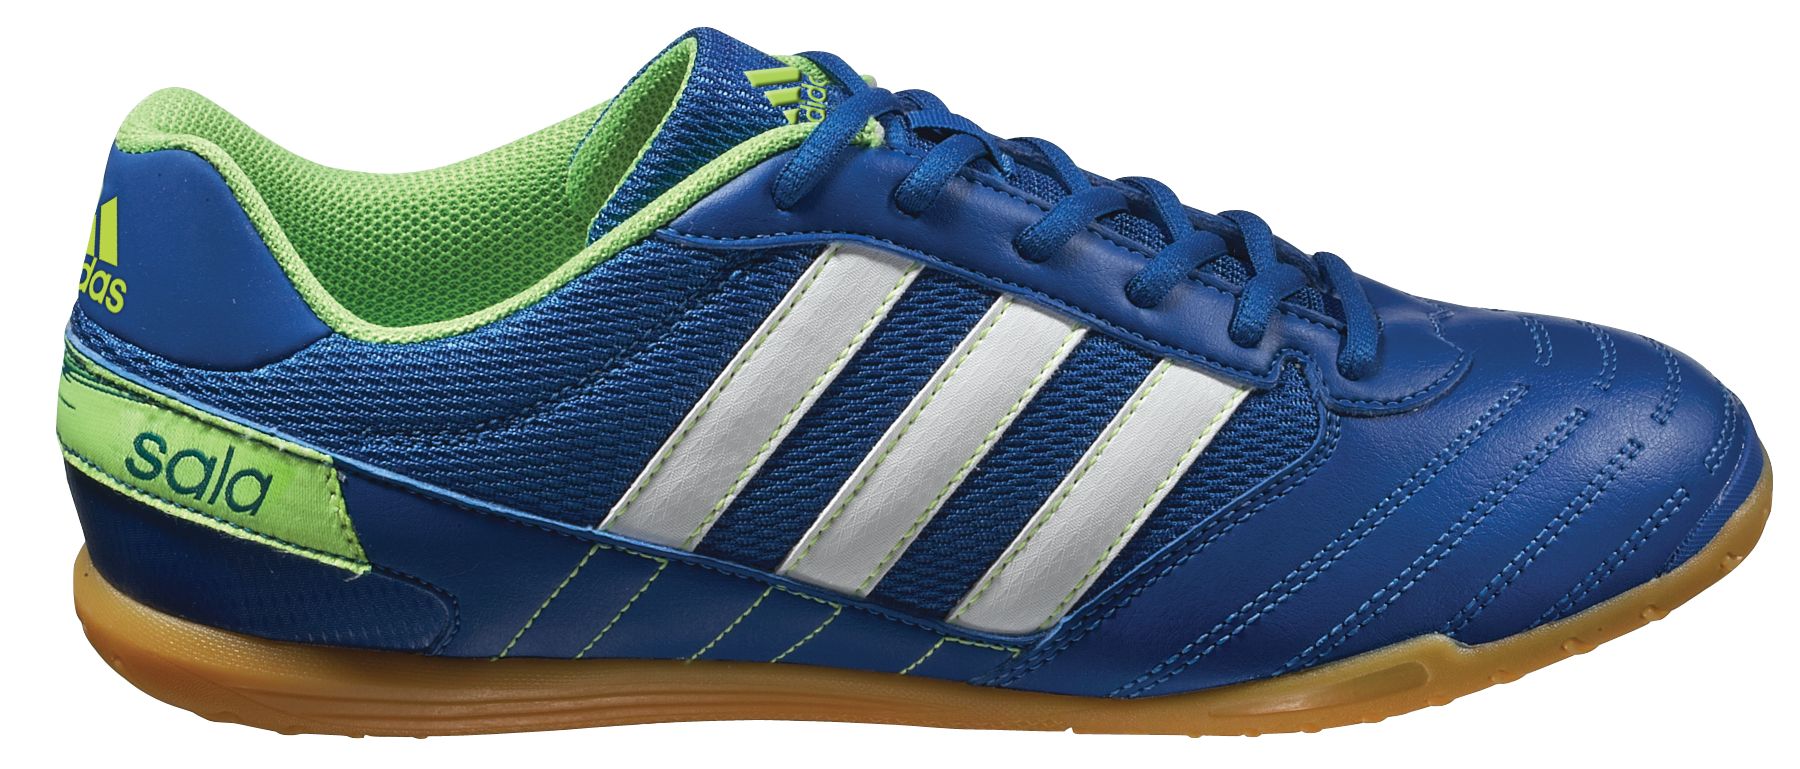 adidas Men's Freefootball SuperSala Indoor Soccer Shoes